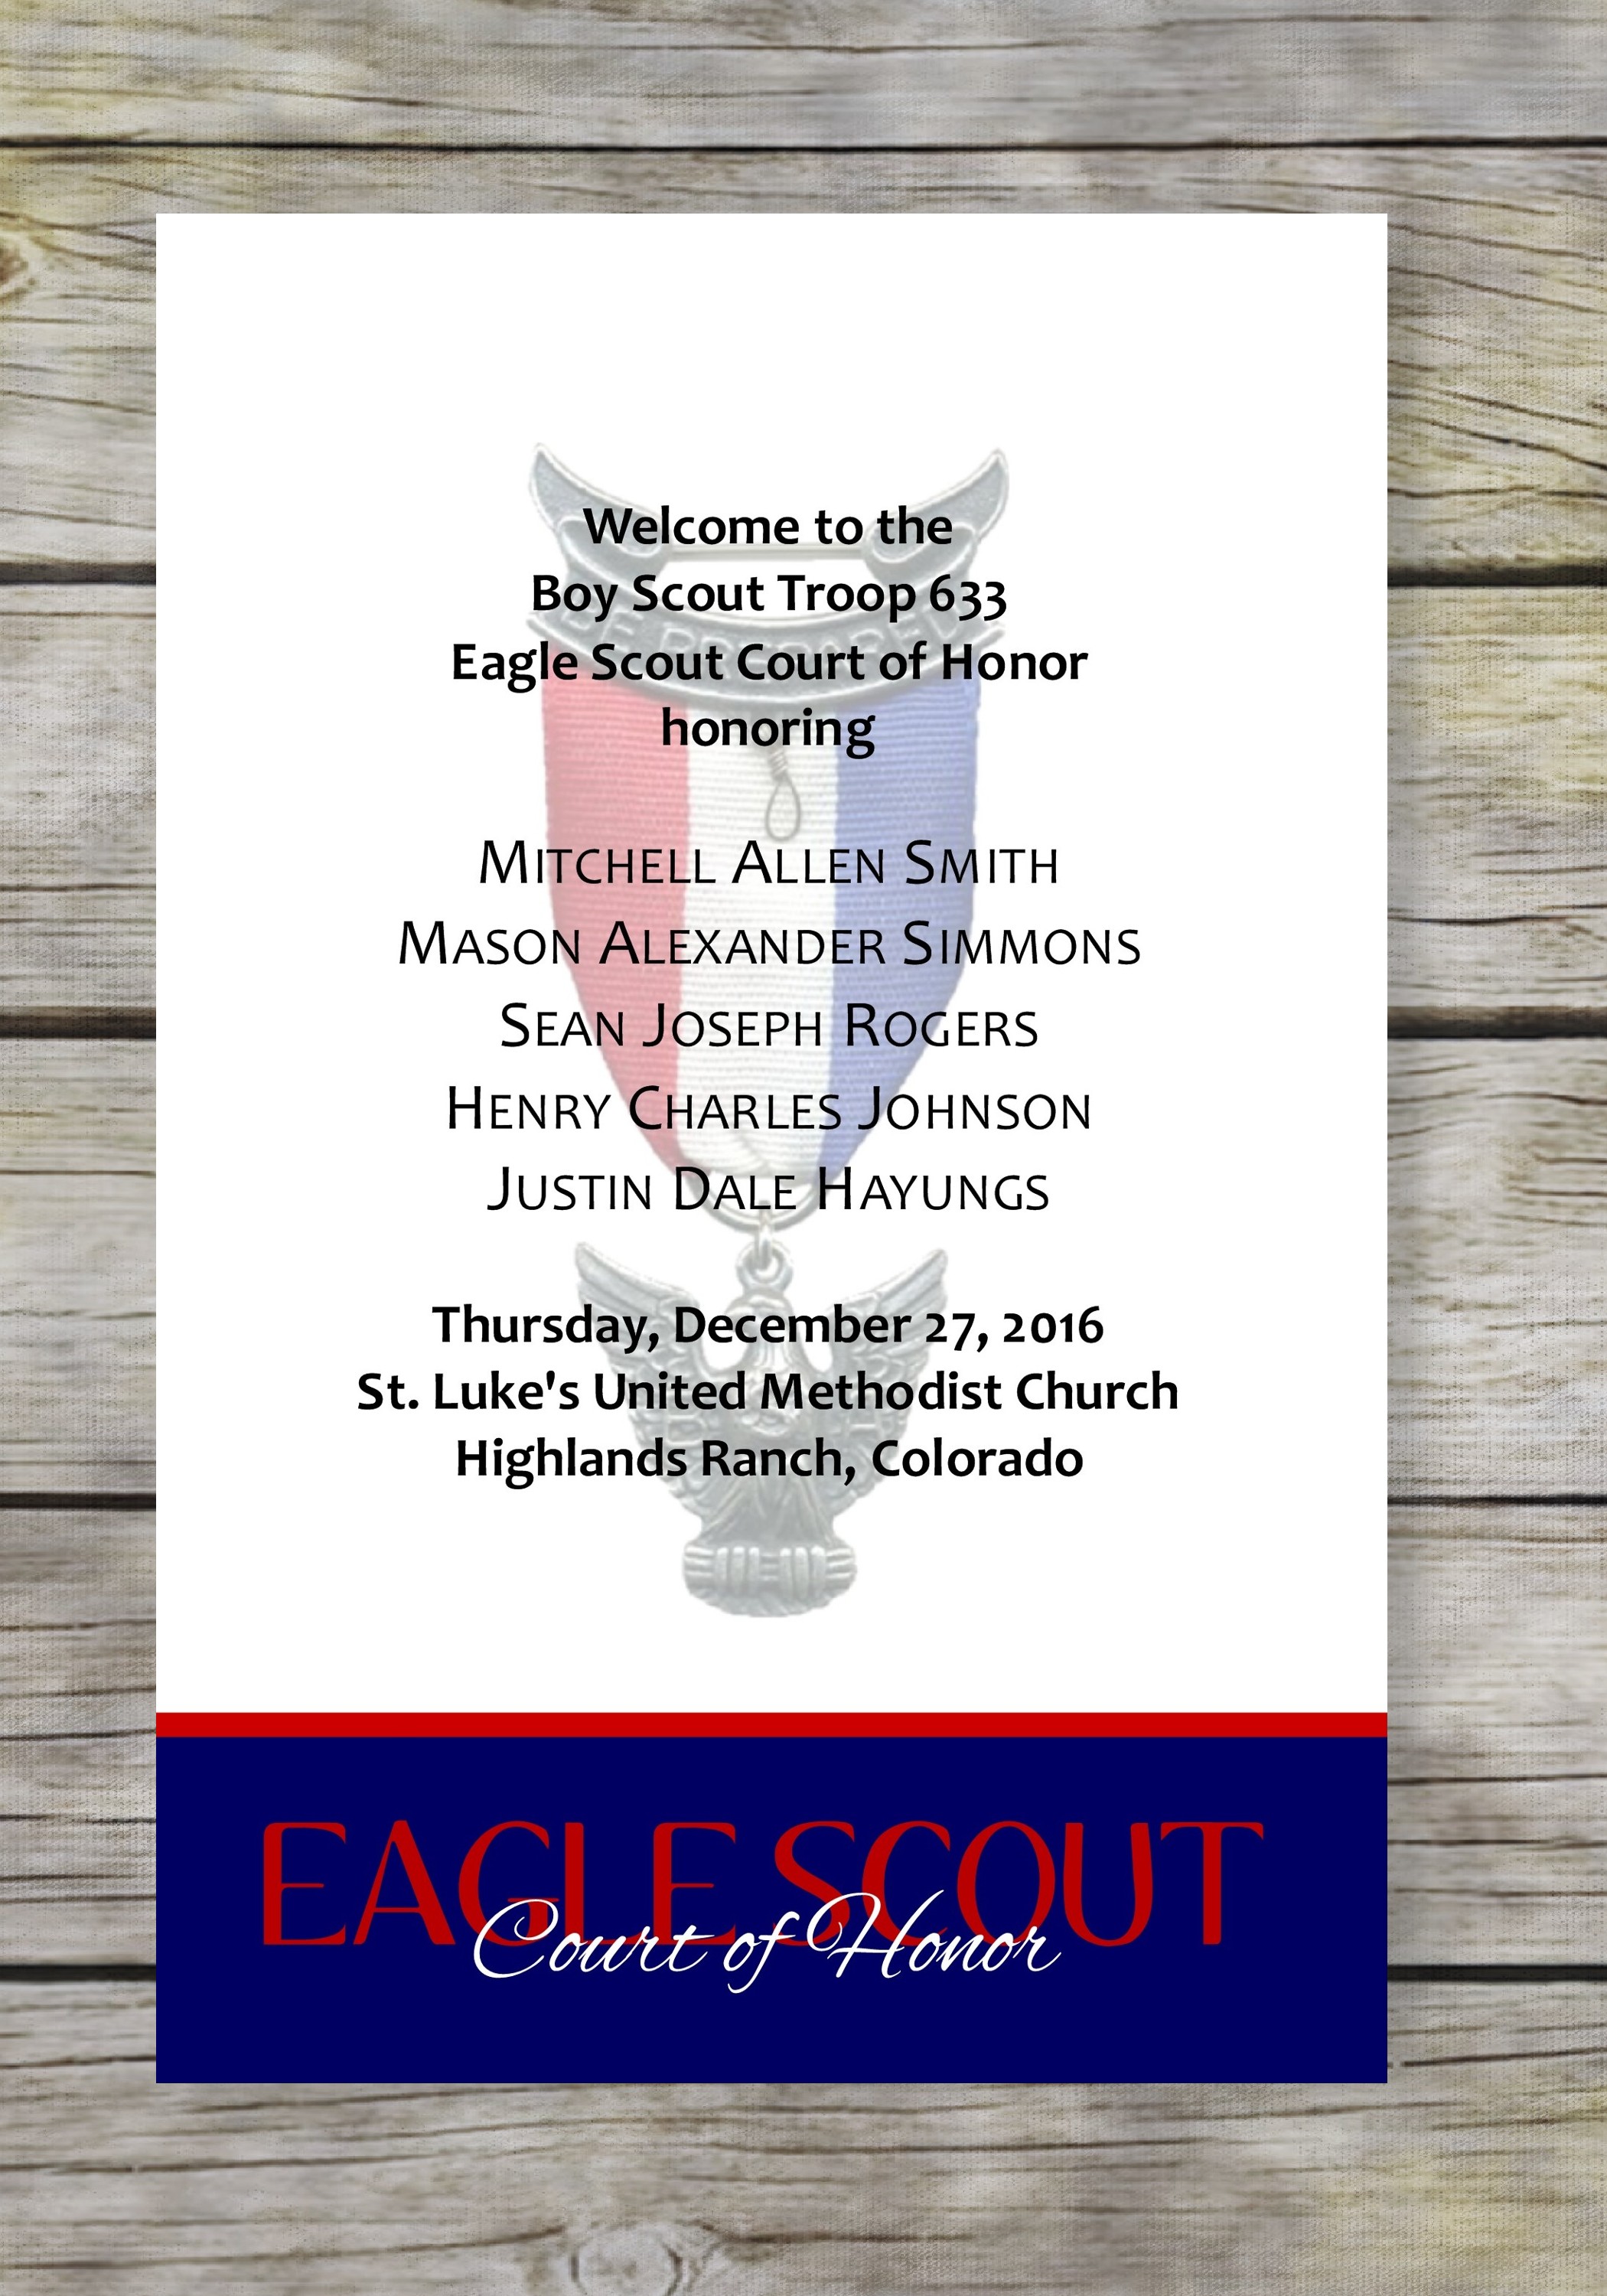 achieve-blue-eagle-scout-court-of-honor-program